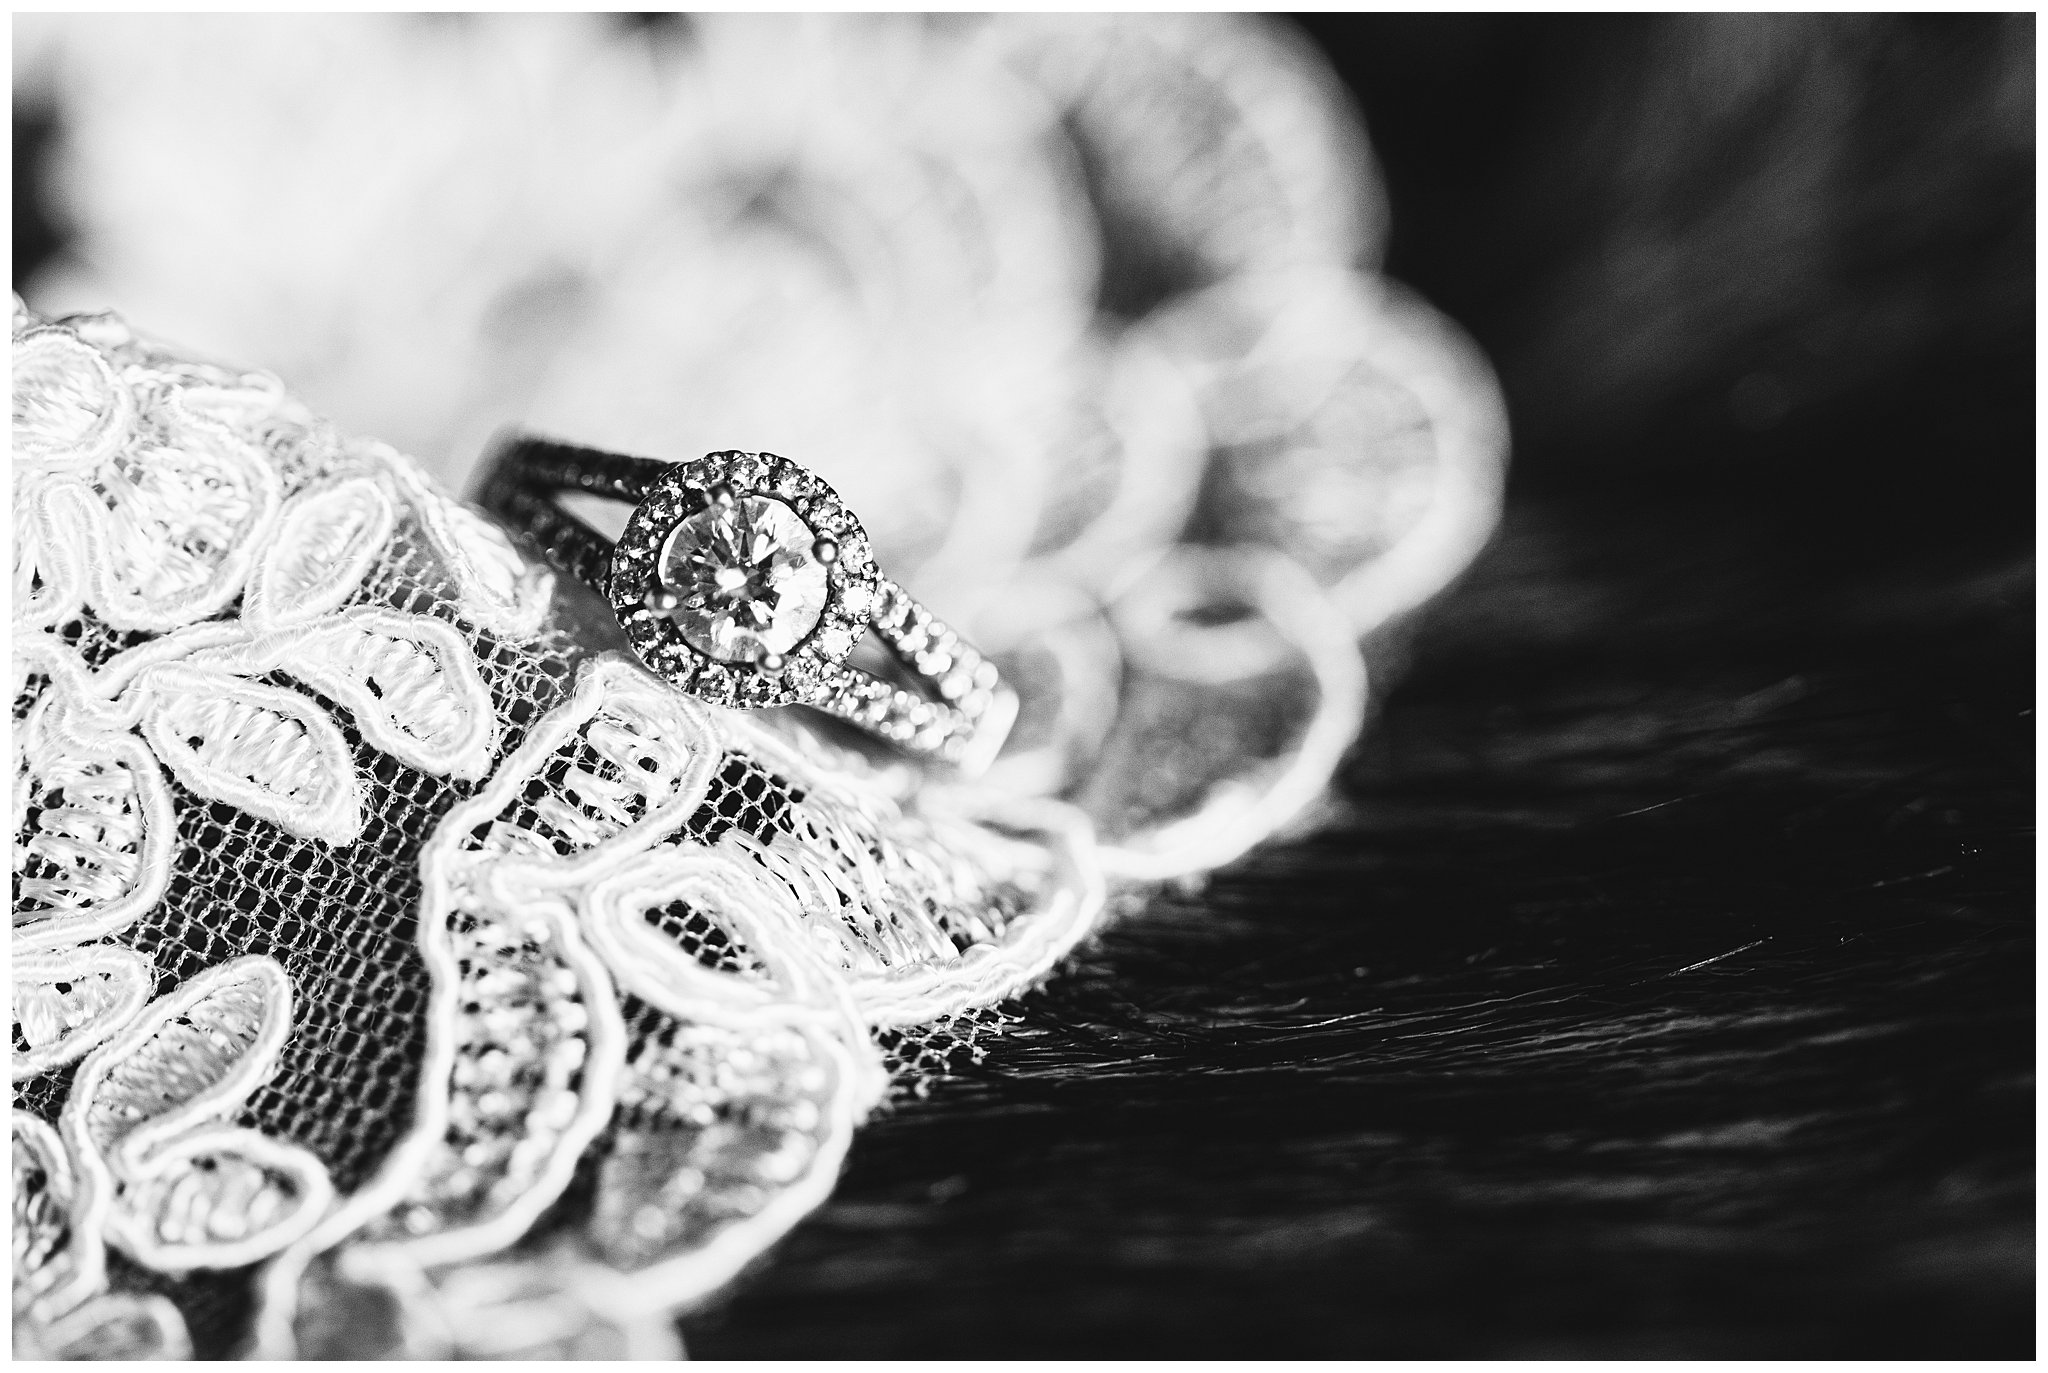 Large diamond engagement ring sat on lacy wedding dress